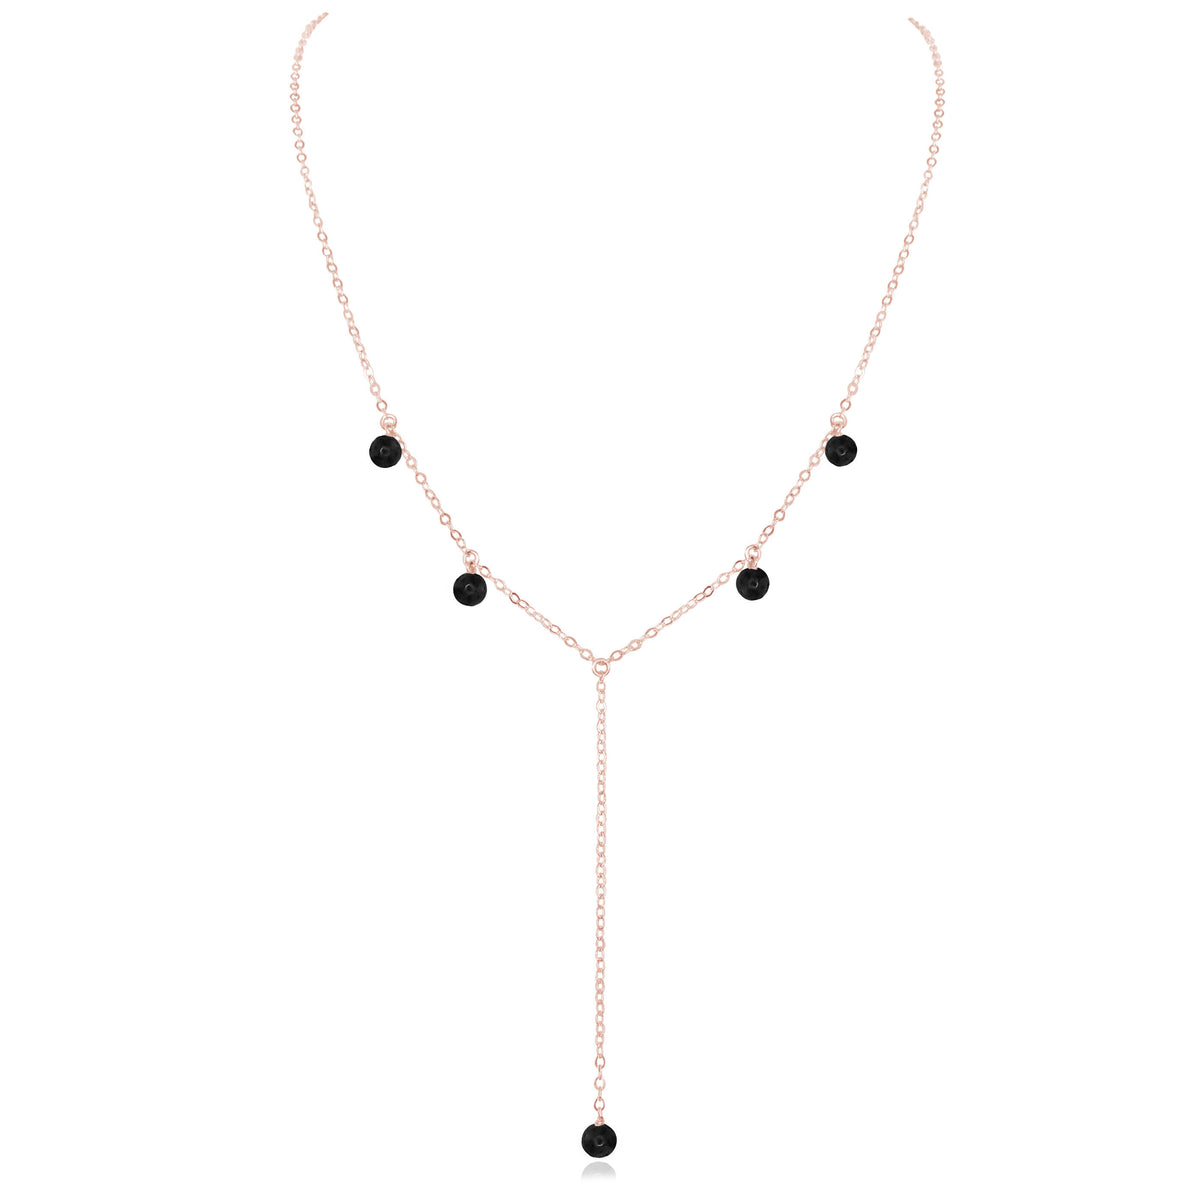 Boho Y Necklace - Black Tourmaline - 14K Rose Gold Fill - Luna Tide Handmade Jewellery